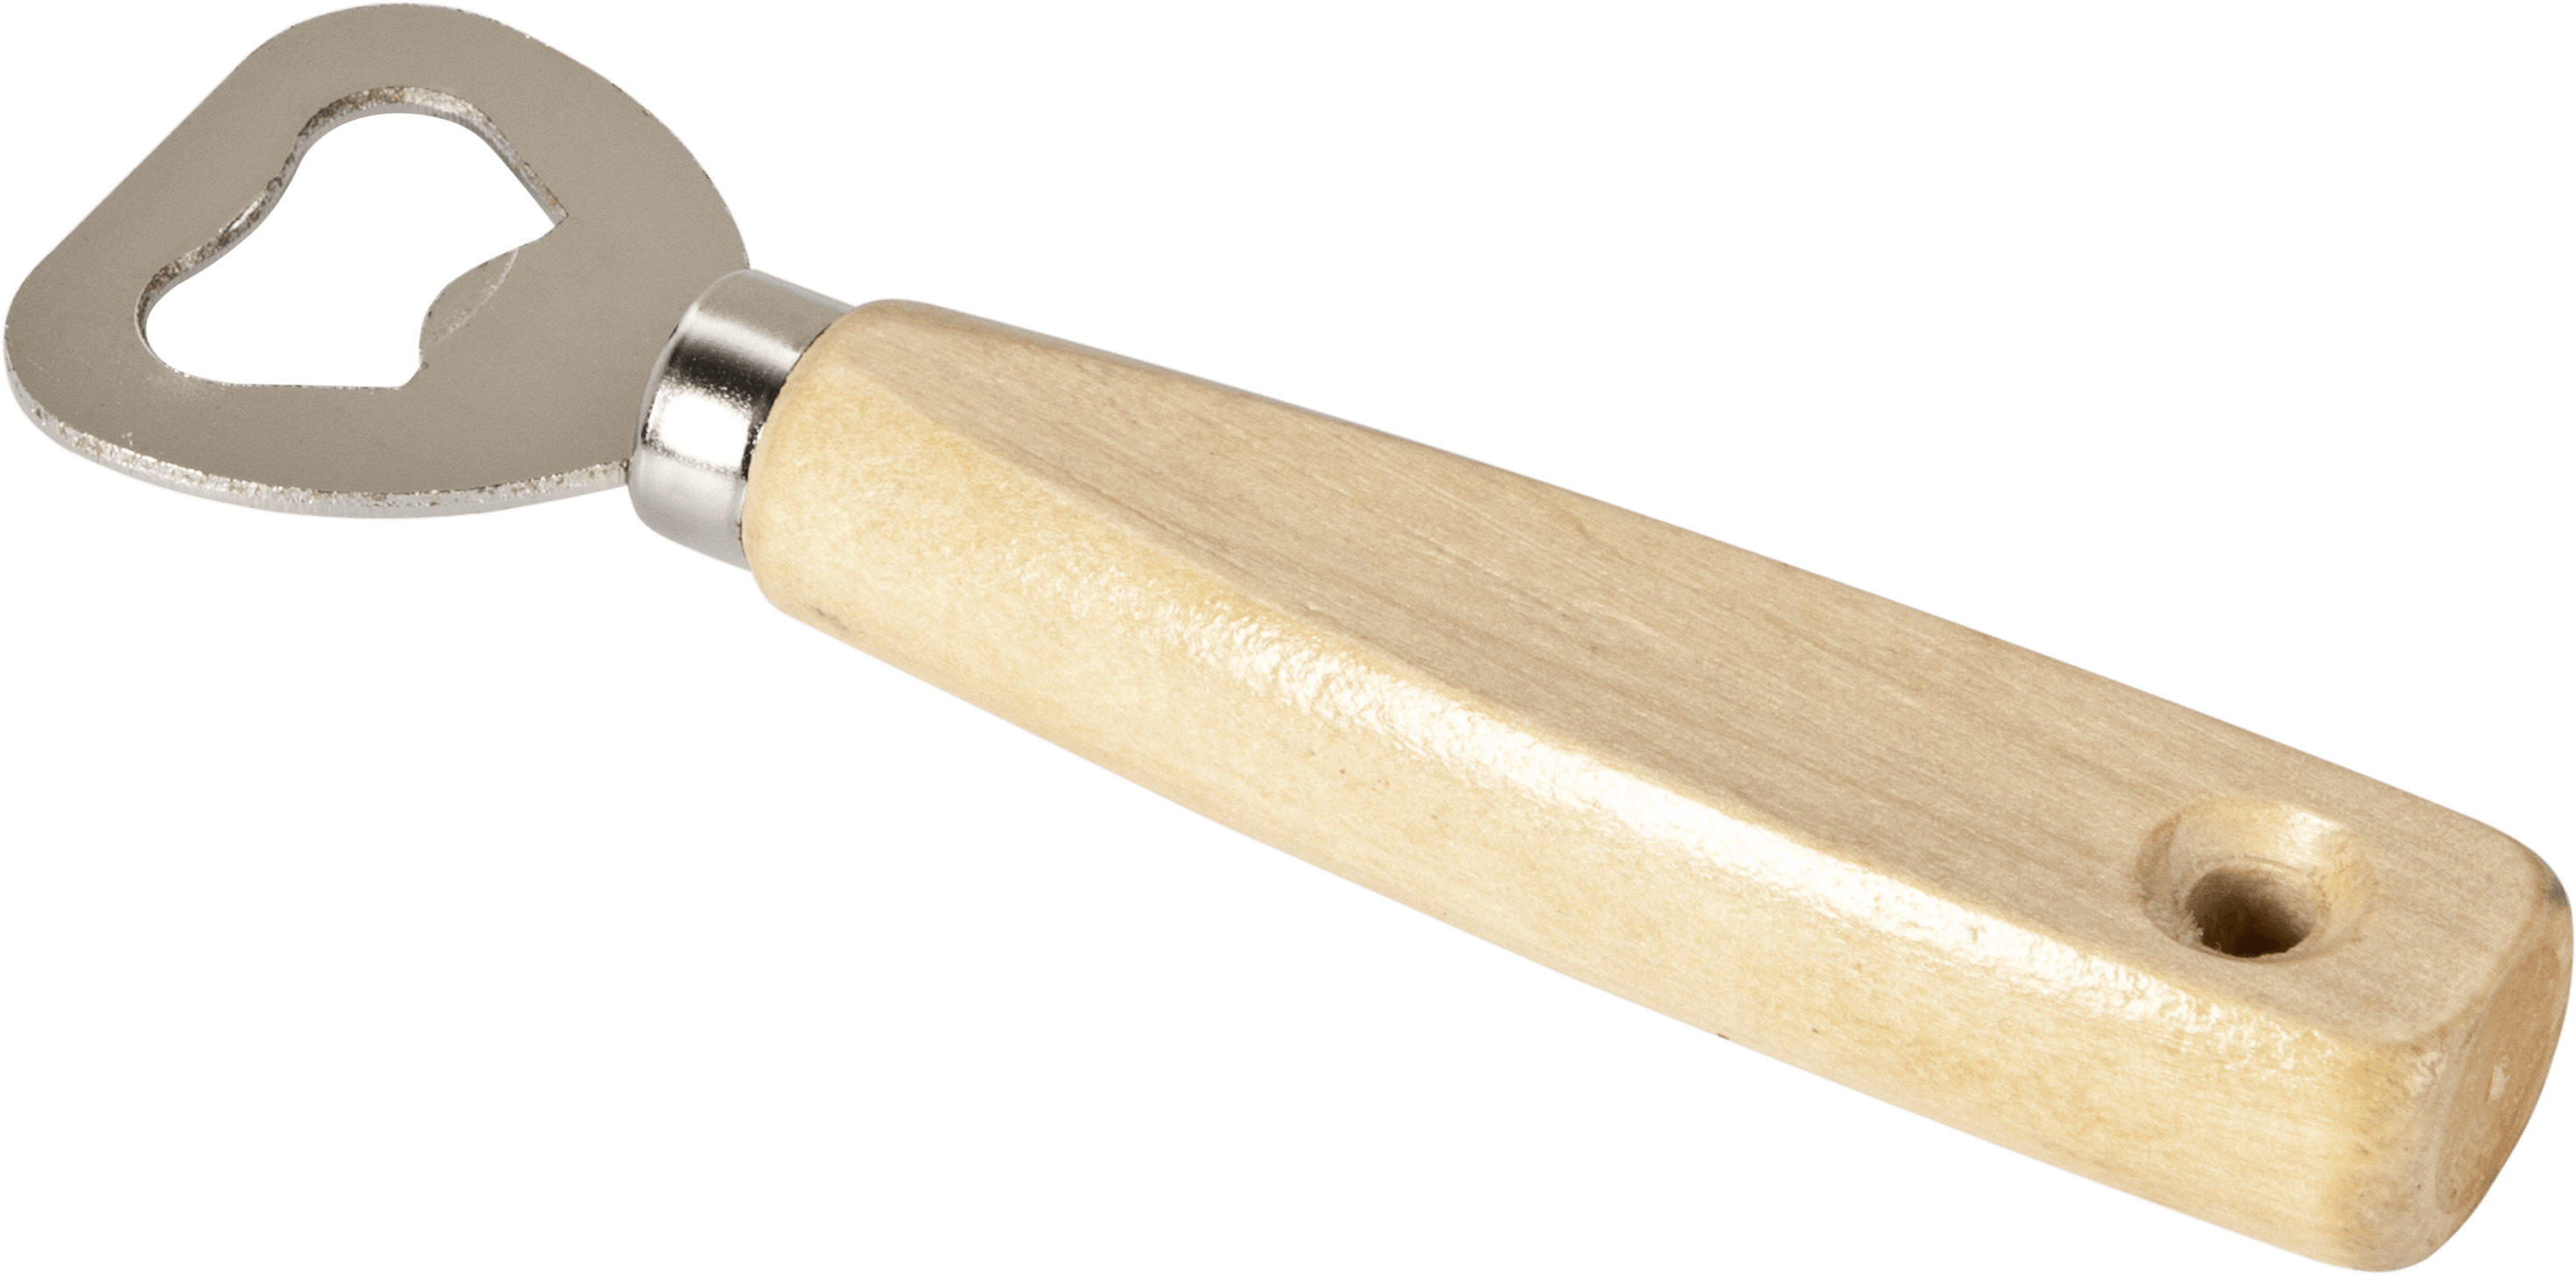 Cap lifter - wooden handle